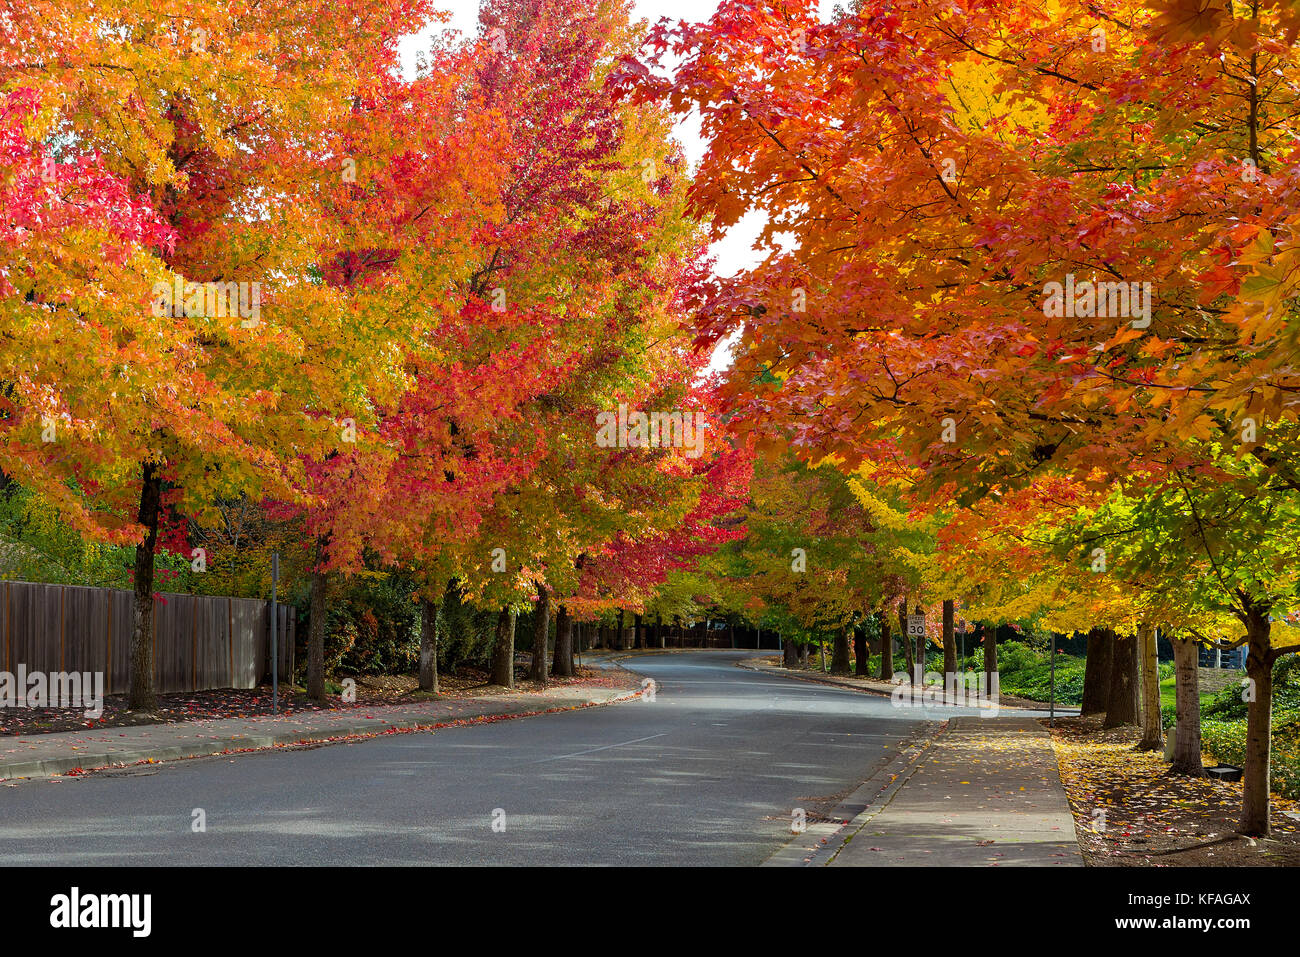 Fall foliage on tree lined street in North American suburban neighborhood in autumn Stock Photo